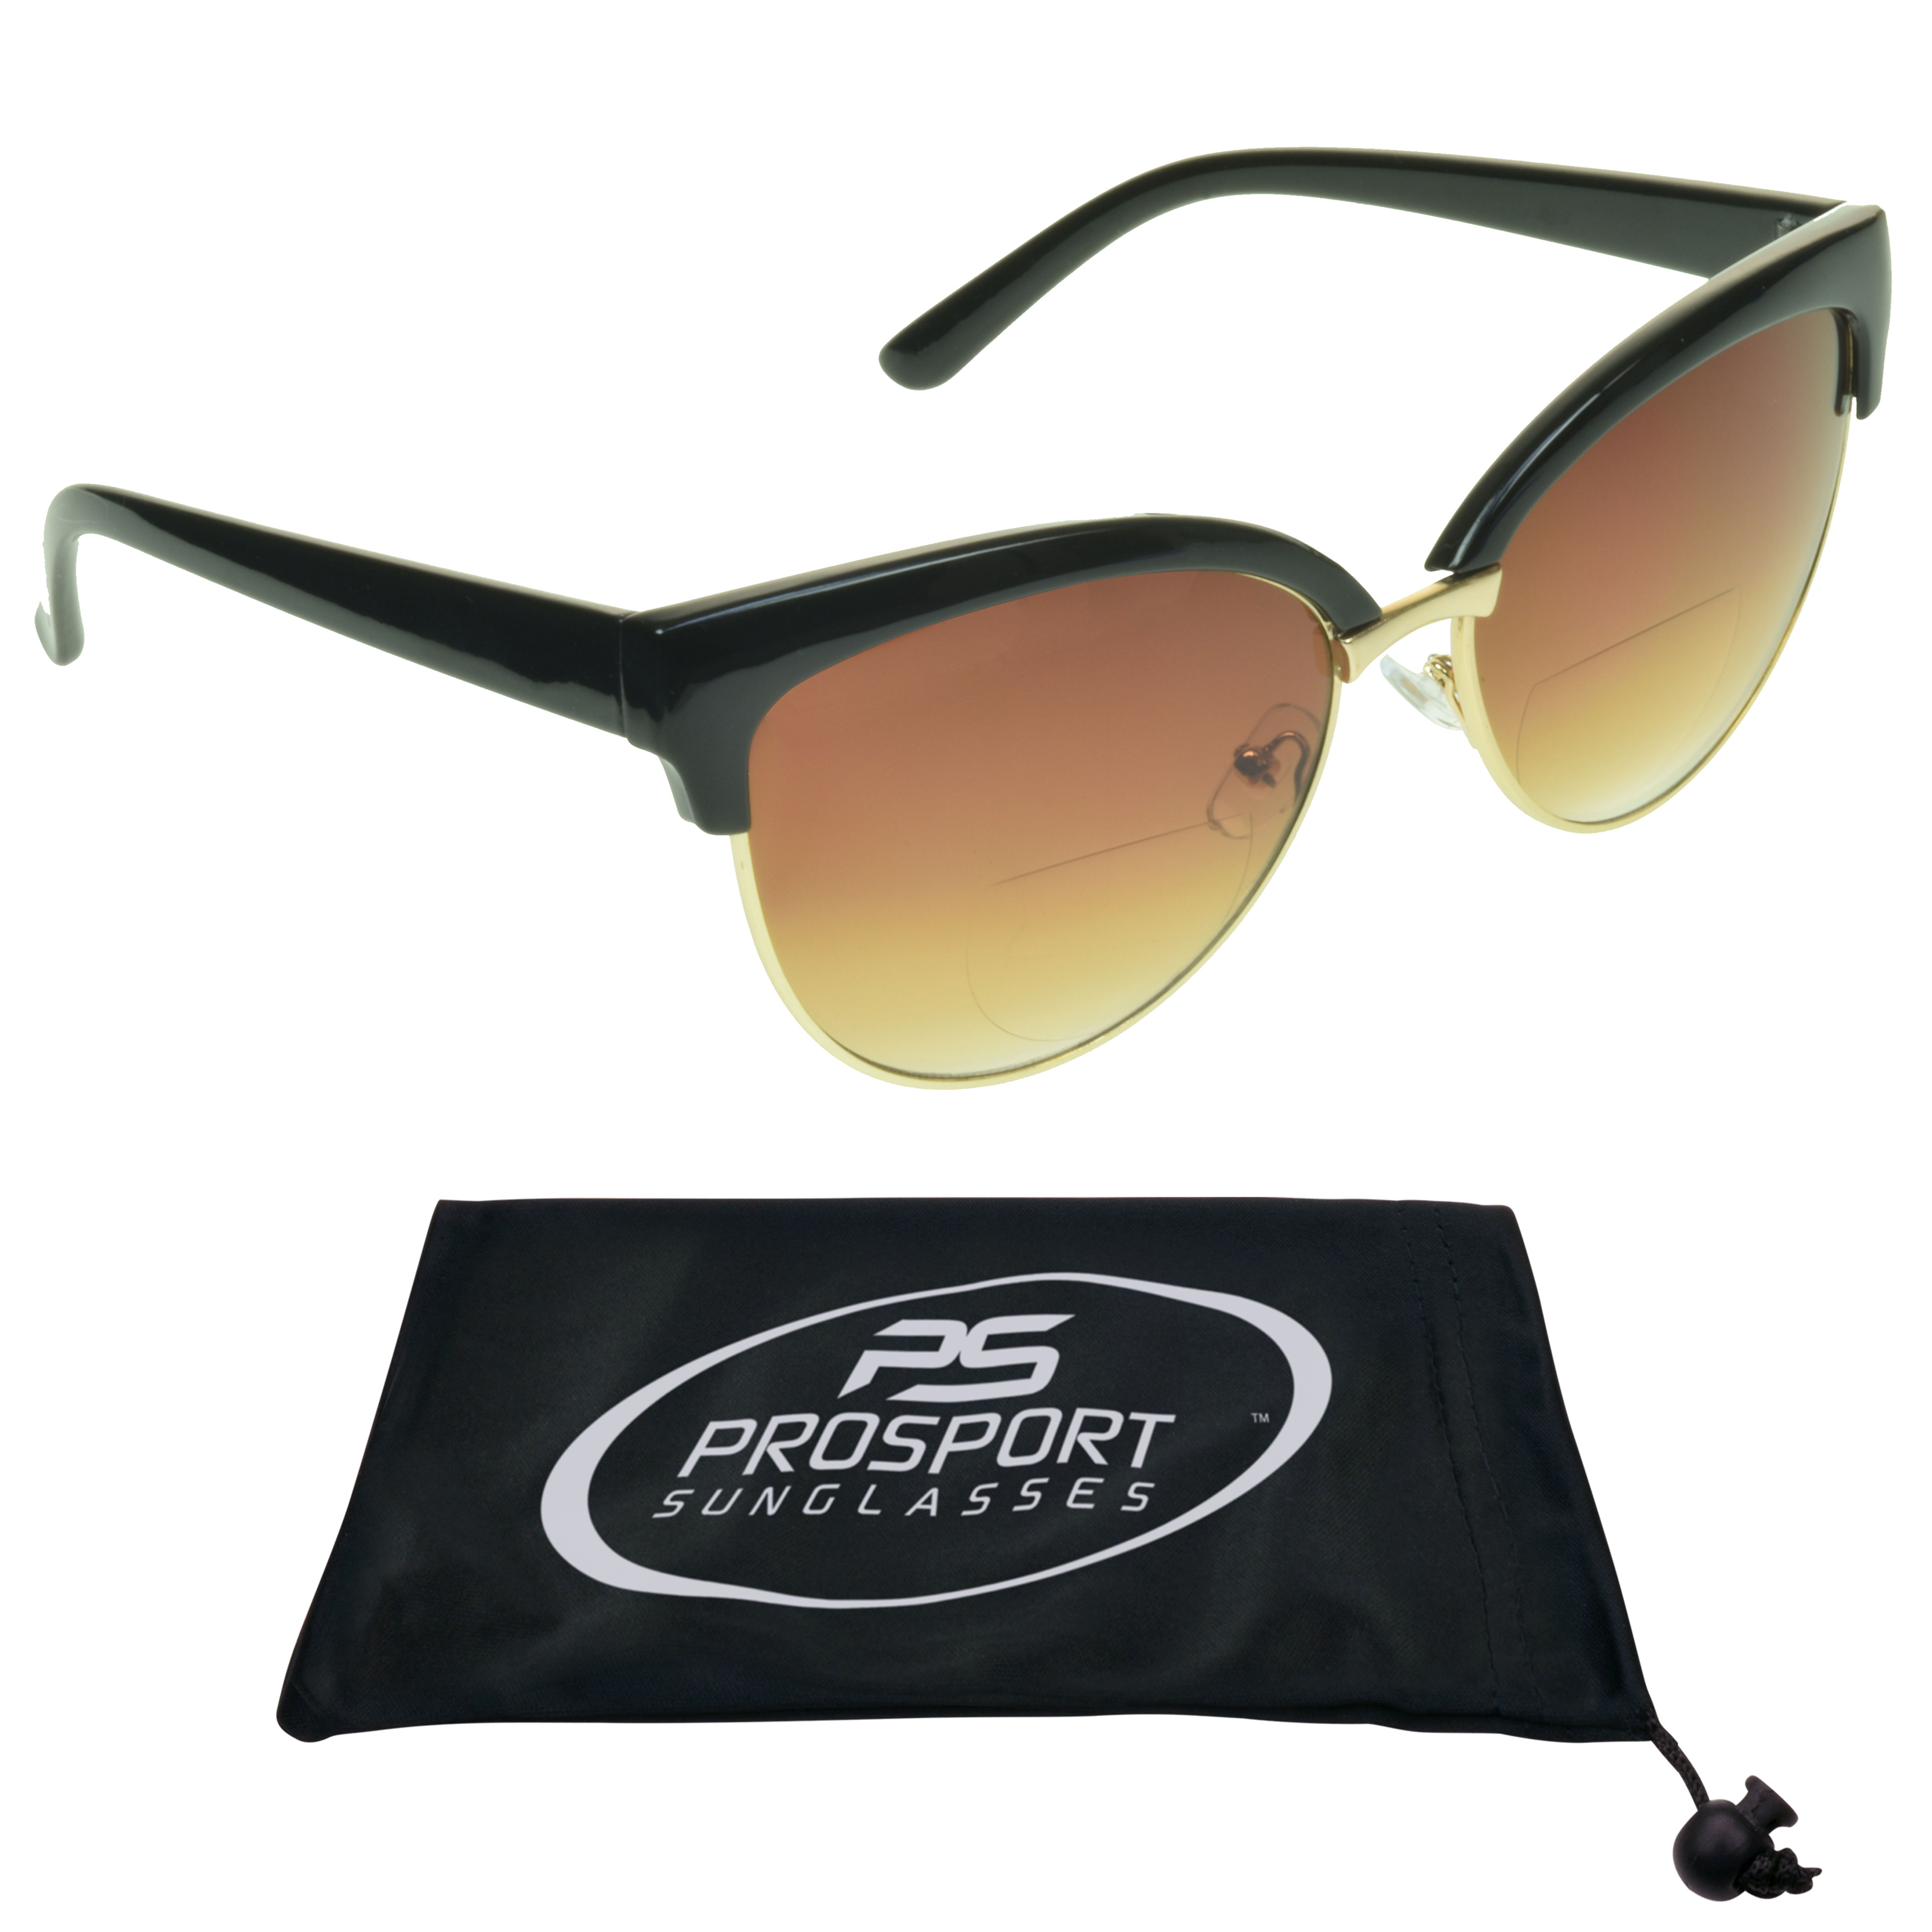 proSPORT Women Bifocal Reading Cateye Fashion Horn Rim Sunglasses Black Gold Frame Brown Lens +2.00 - image 1 of 5